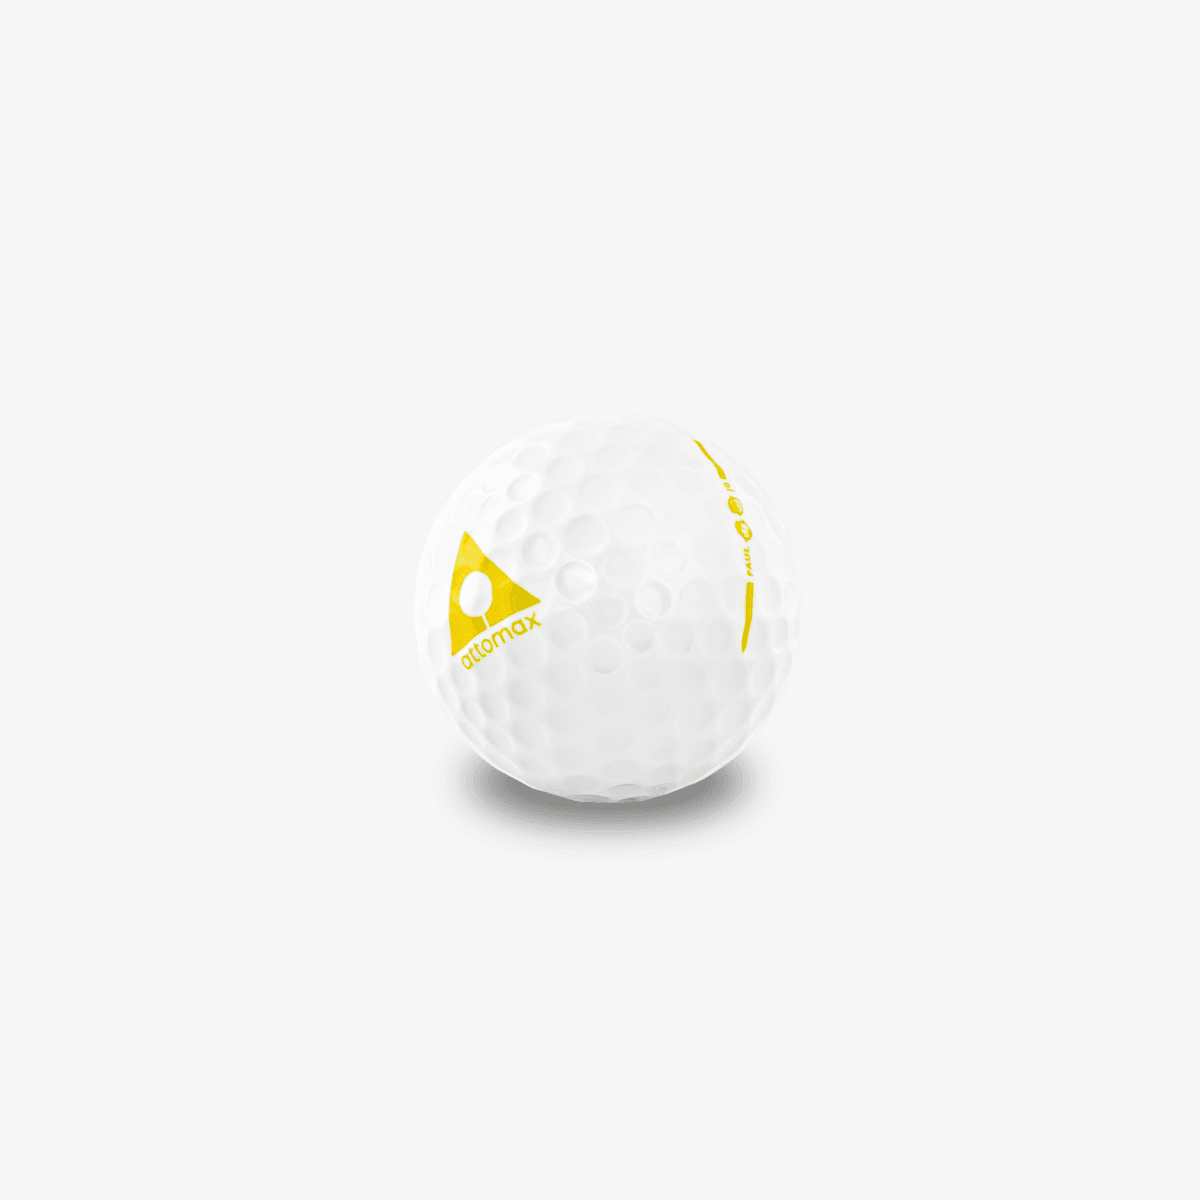 Attomax Golf Balls (Hard) - Attomax® Golf